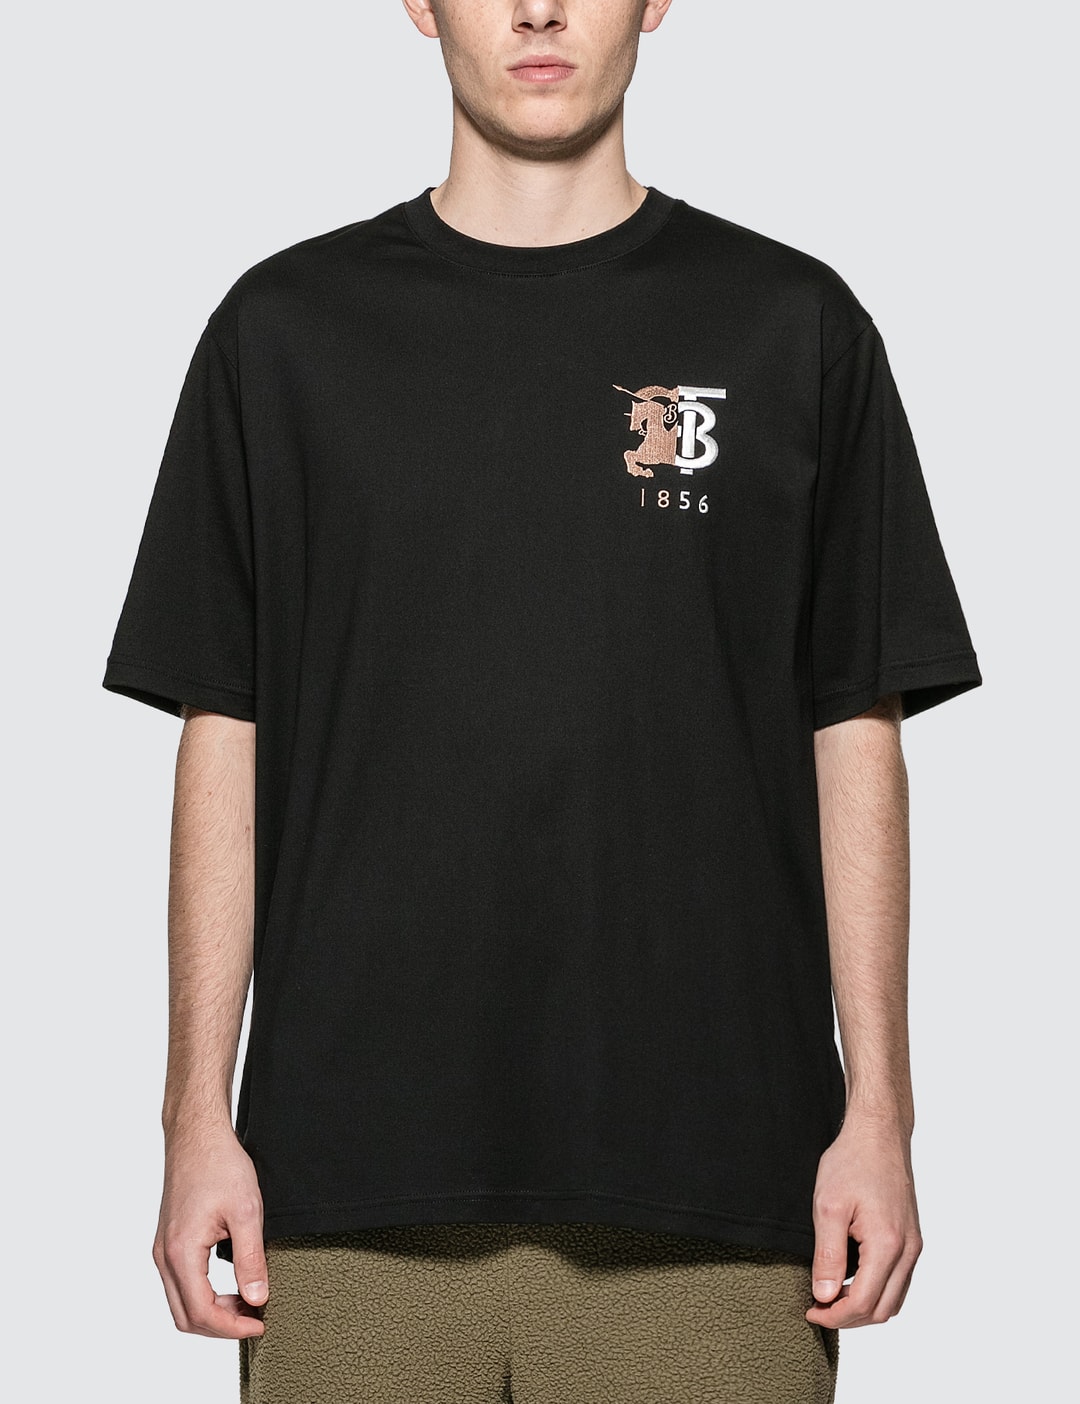 Medicin Seneste nyt Tutor Burberry - 1856 Logo T-Shirt | HBX -  ハイプビースト(Hypebeast)が厳選したグローバルファッション&ライフスタイル